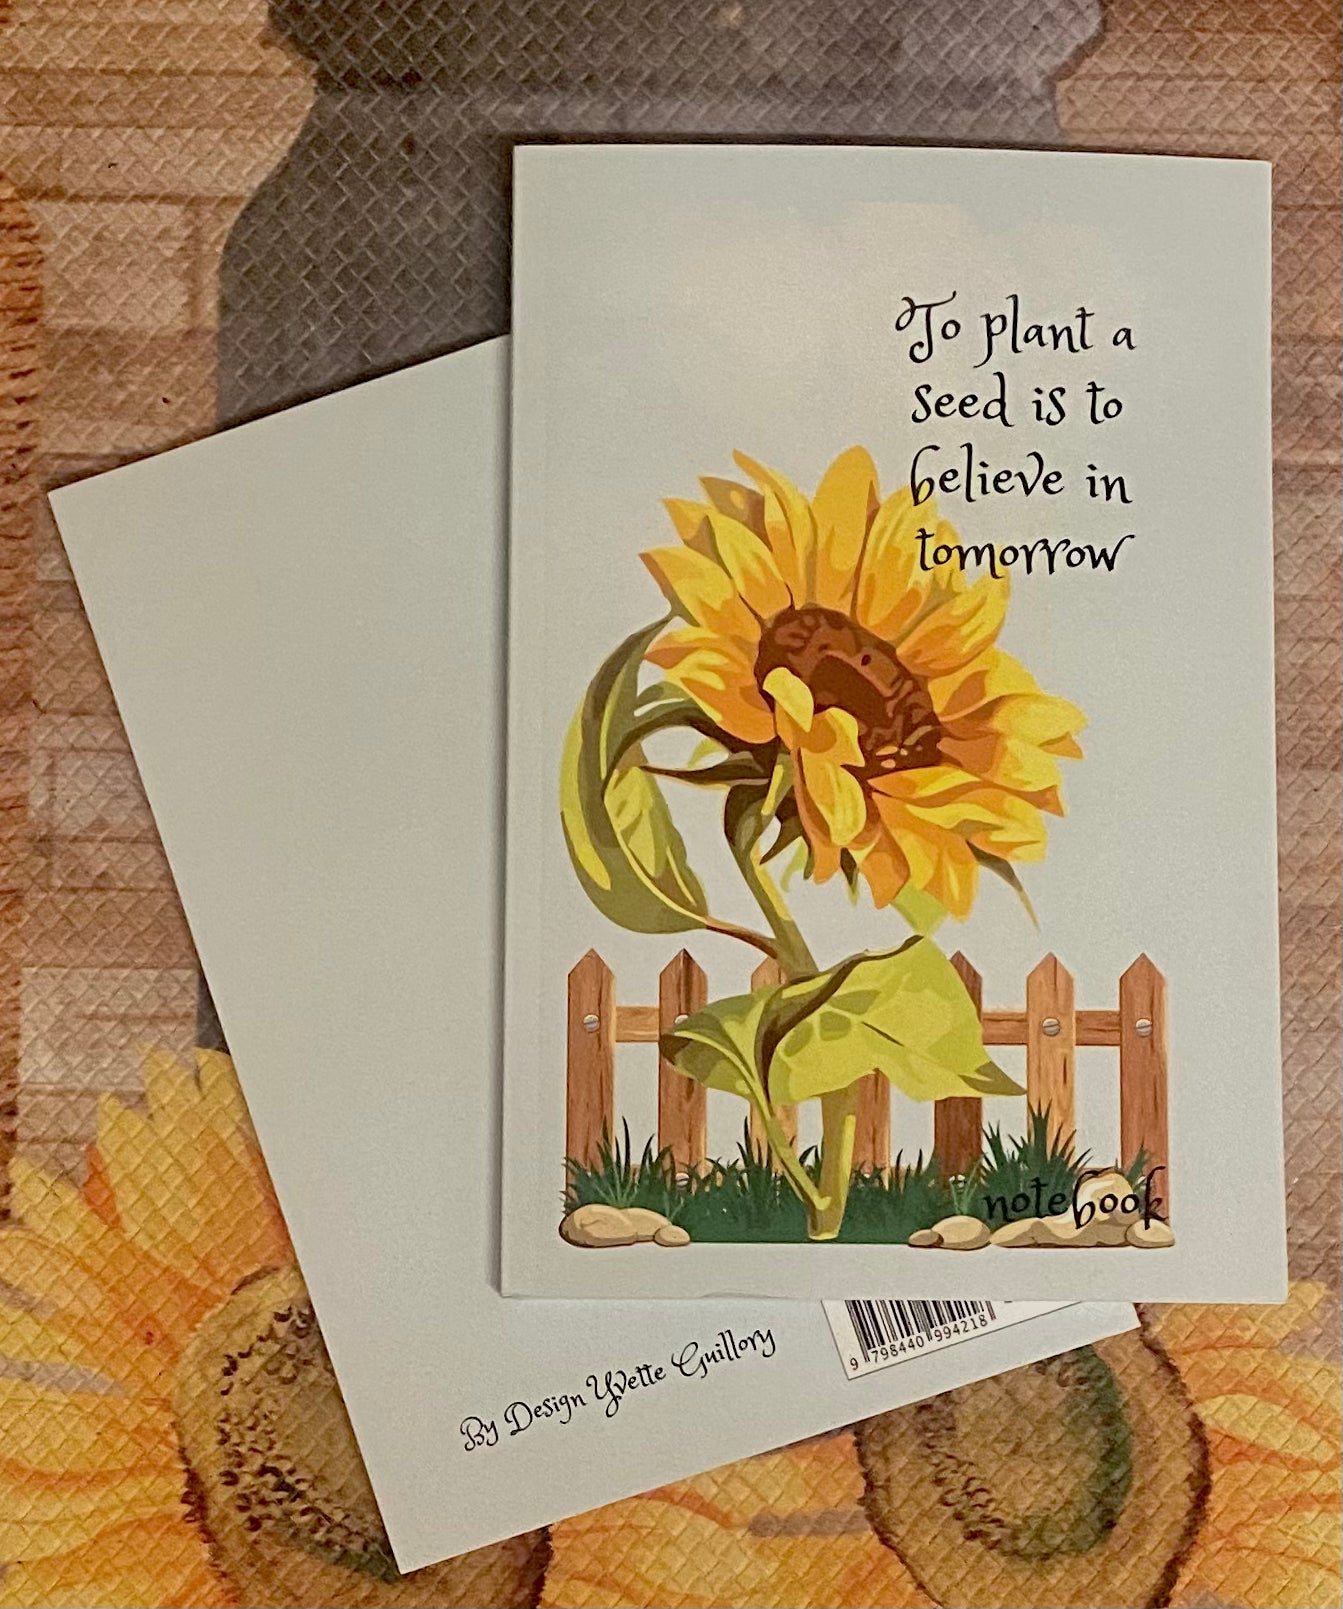 Sunflower Notebook and Journal